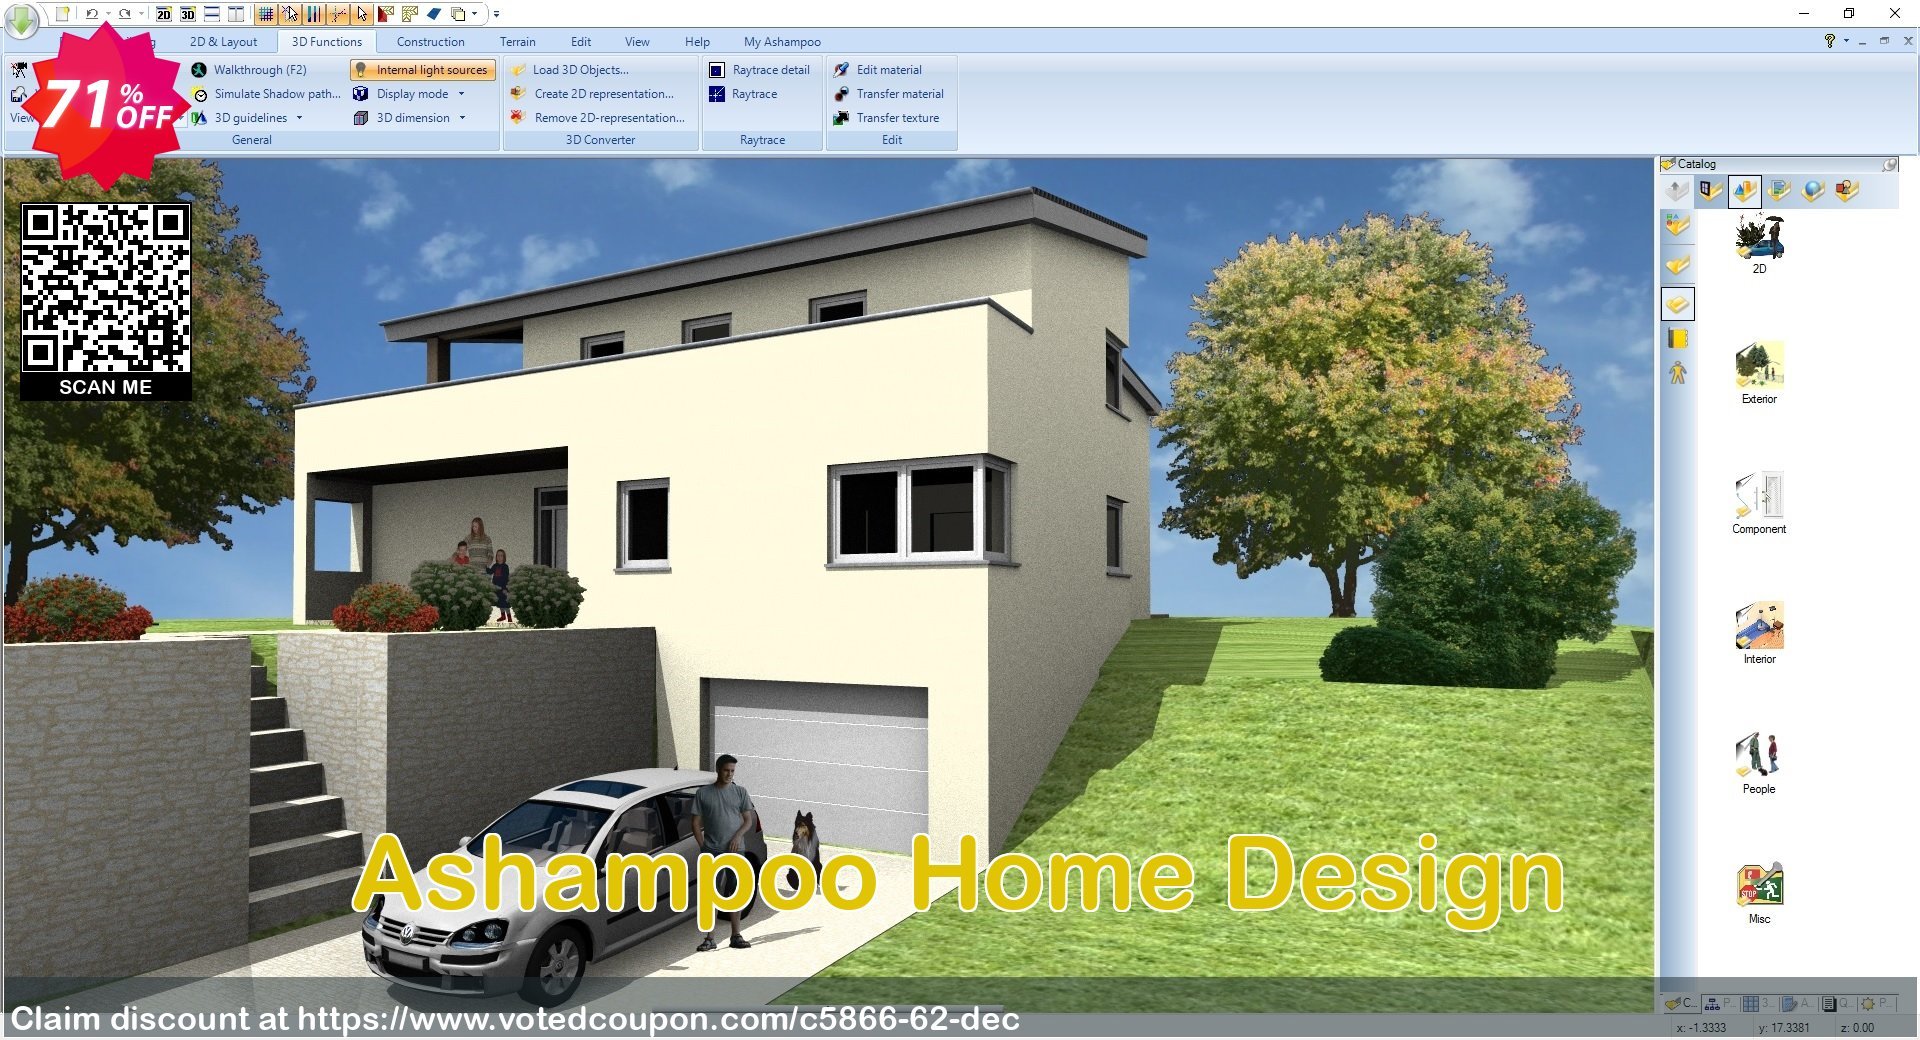 Ashampoo Home Design Coupon, discount 60% OFF Ashampoo Home Design, verified. Promotion: Wonderful discounts code of Ashampoo Home Design, tested & approved